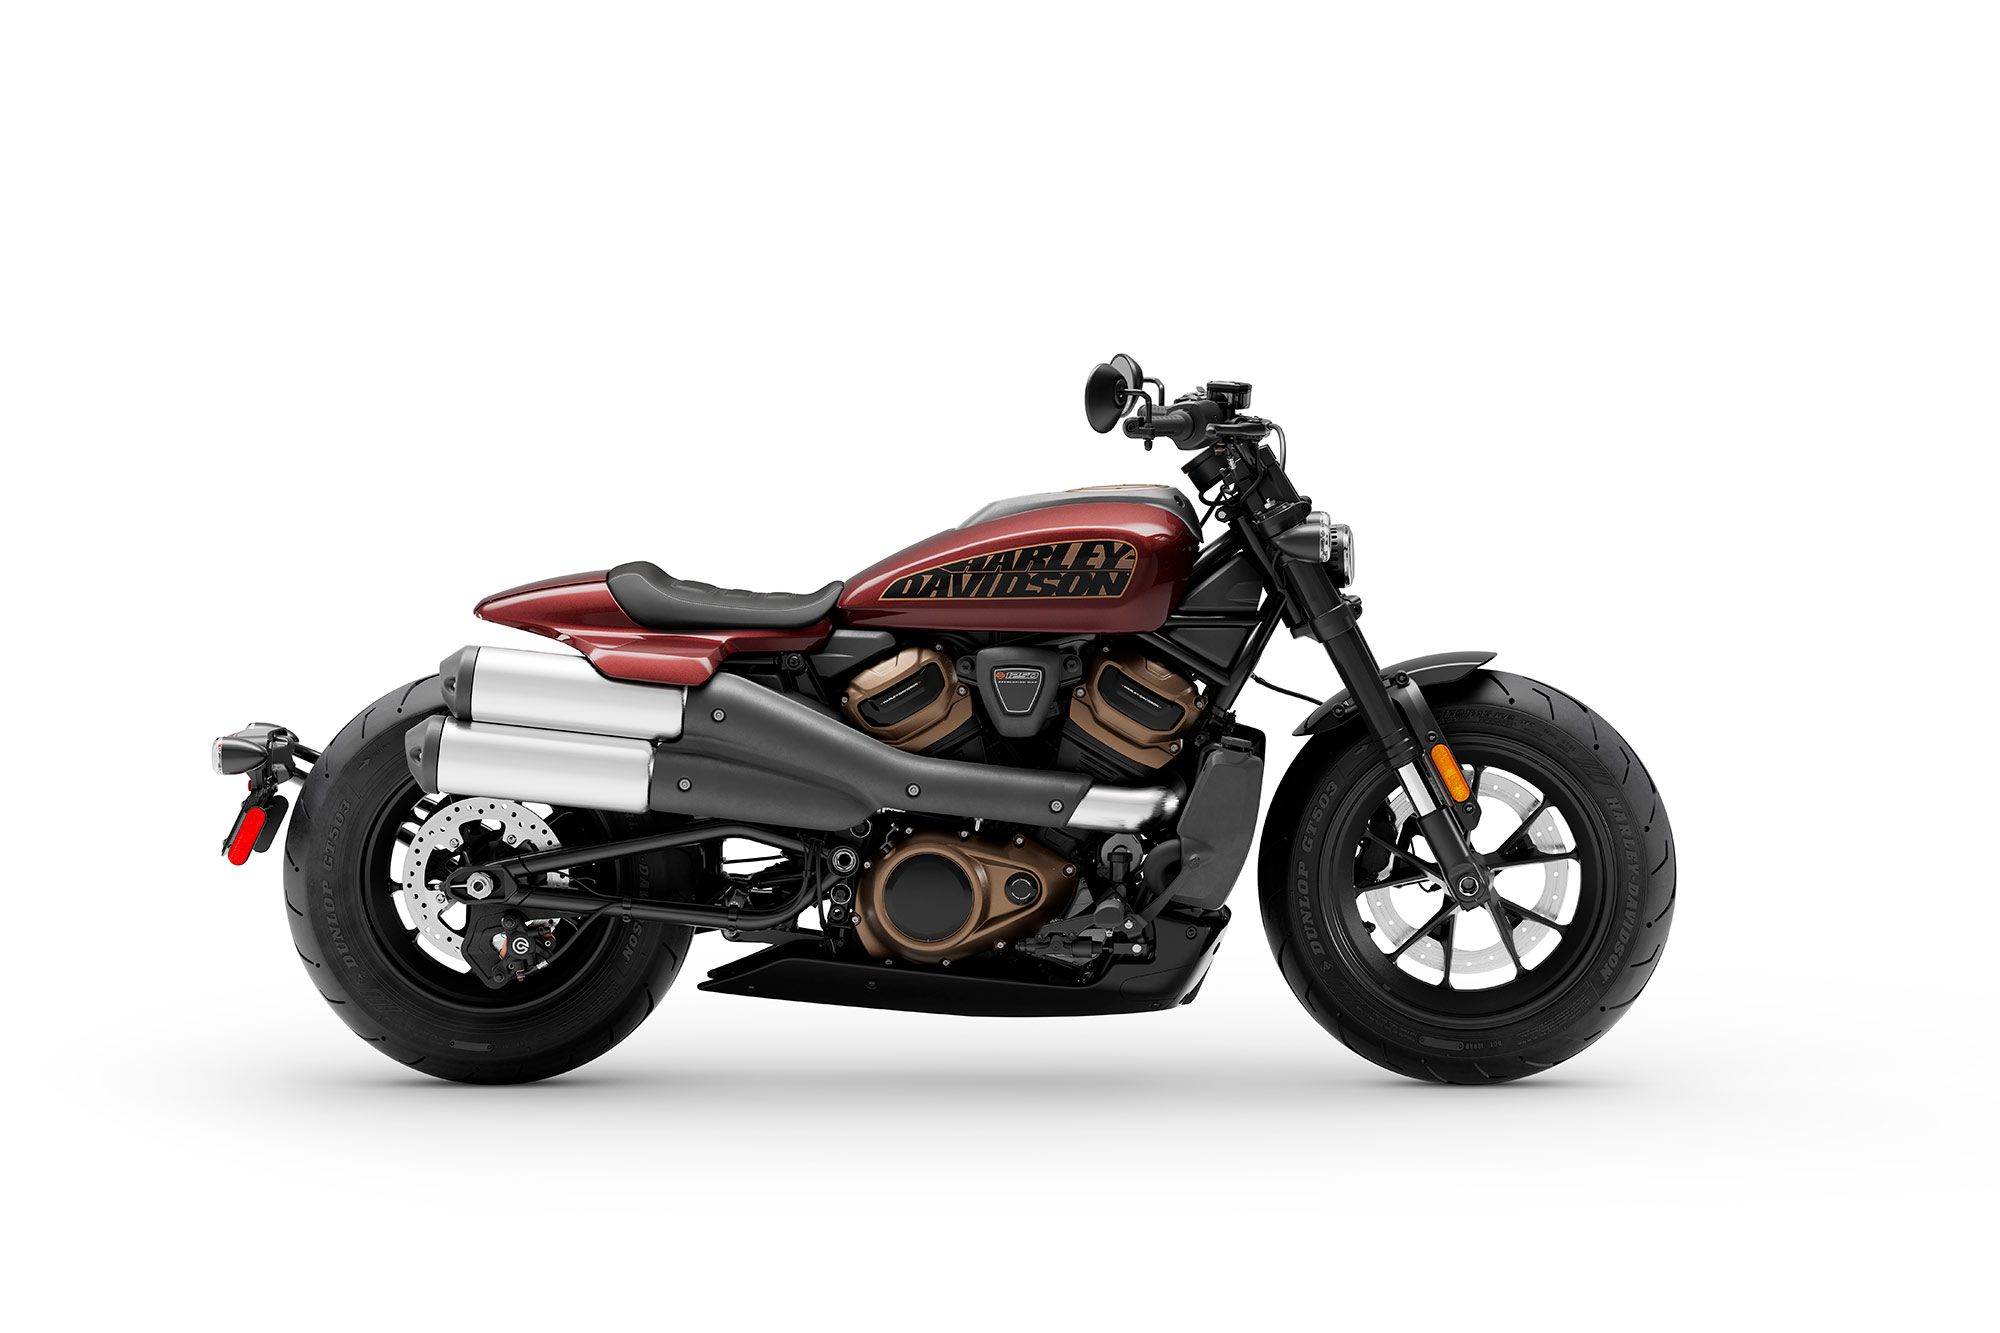 2021 Harley-Davidson Sportster S in Midnight Crimson.